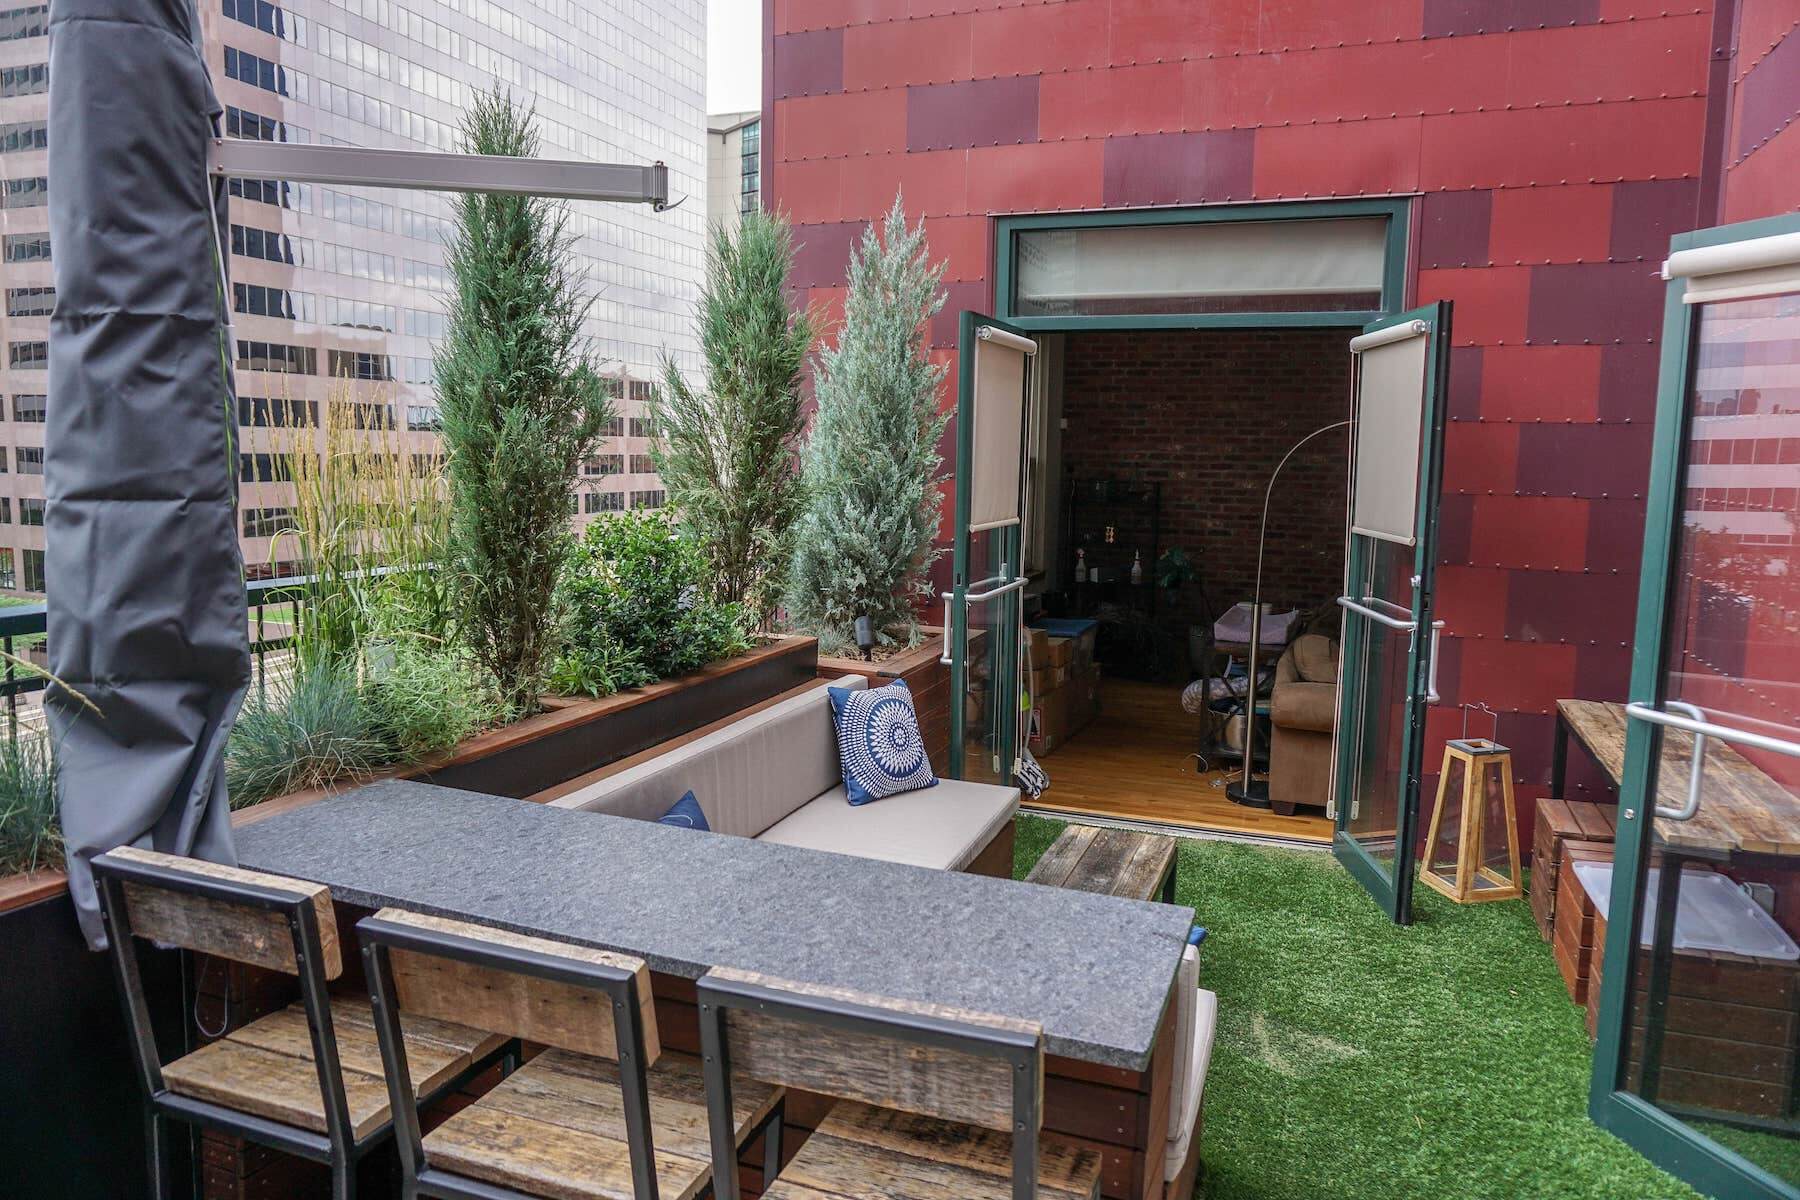 Built-In Furniture Rooftop Deck Outdoor Kitchen Built-In Planters Downtown Denver